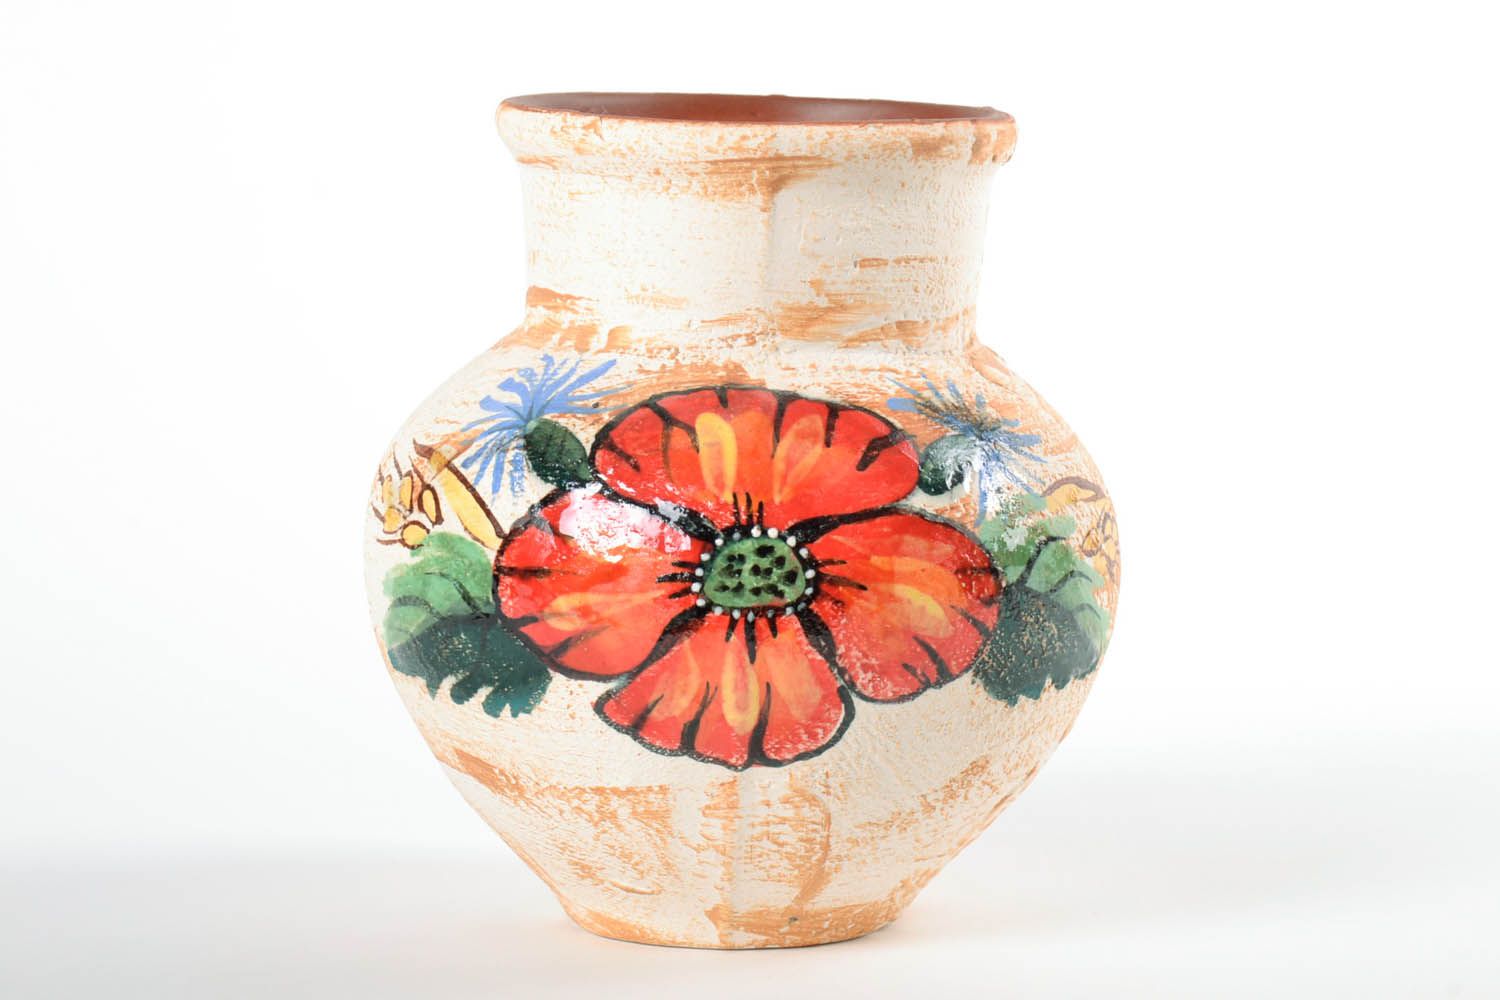 30 oz ceramic handmade village-style milk jug with floral décor 2 lb photo 3